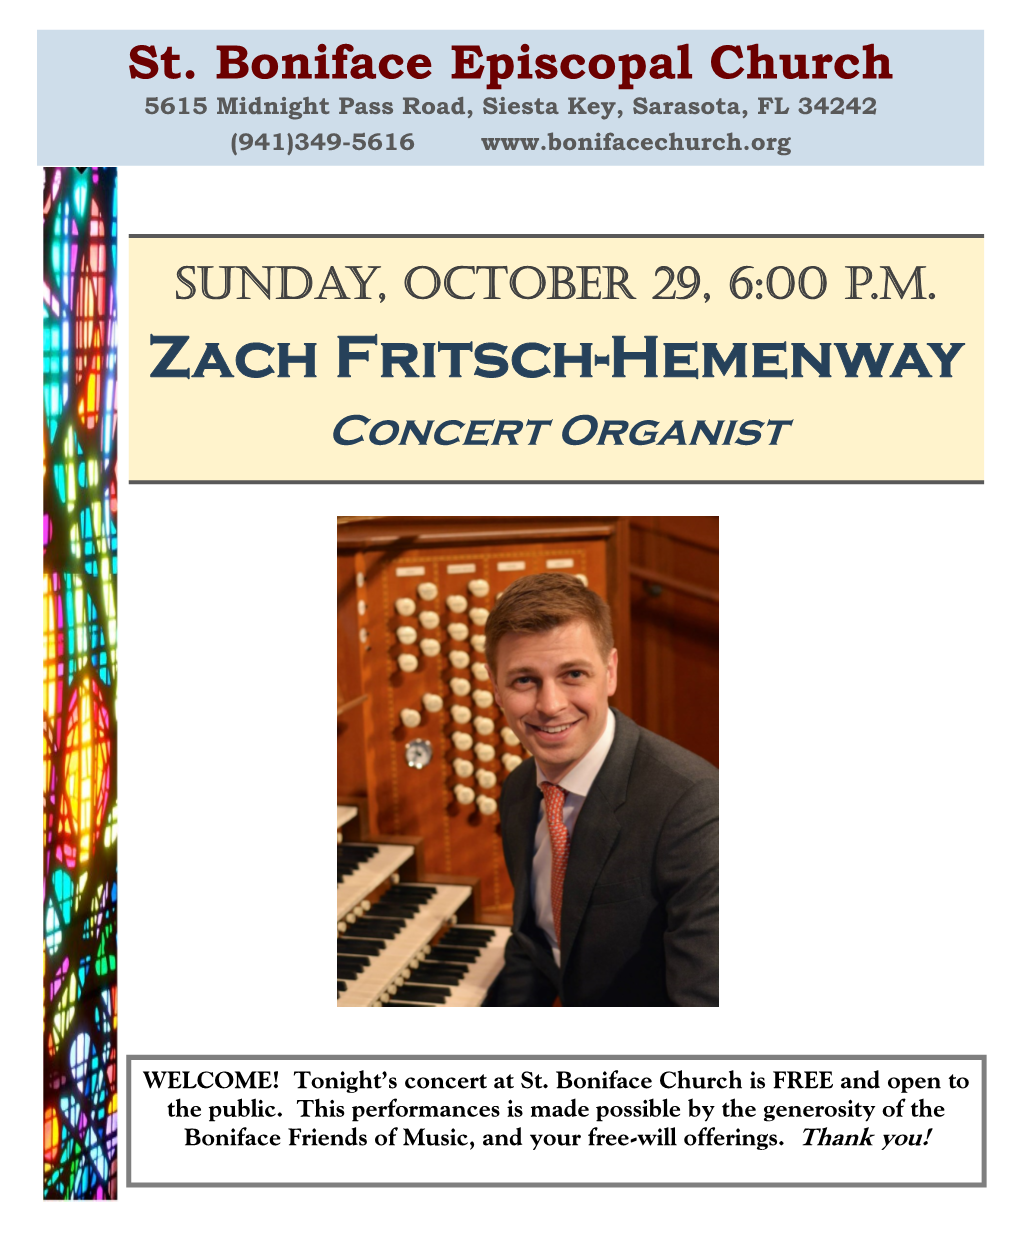 Zach Fritsch-Hemenway Concert Organist